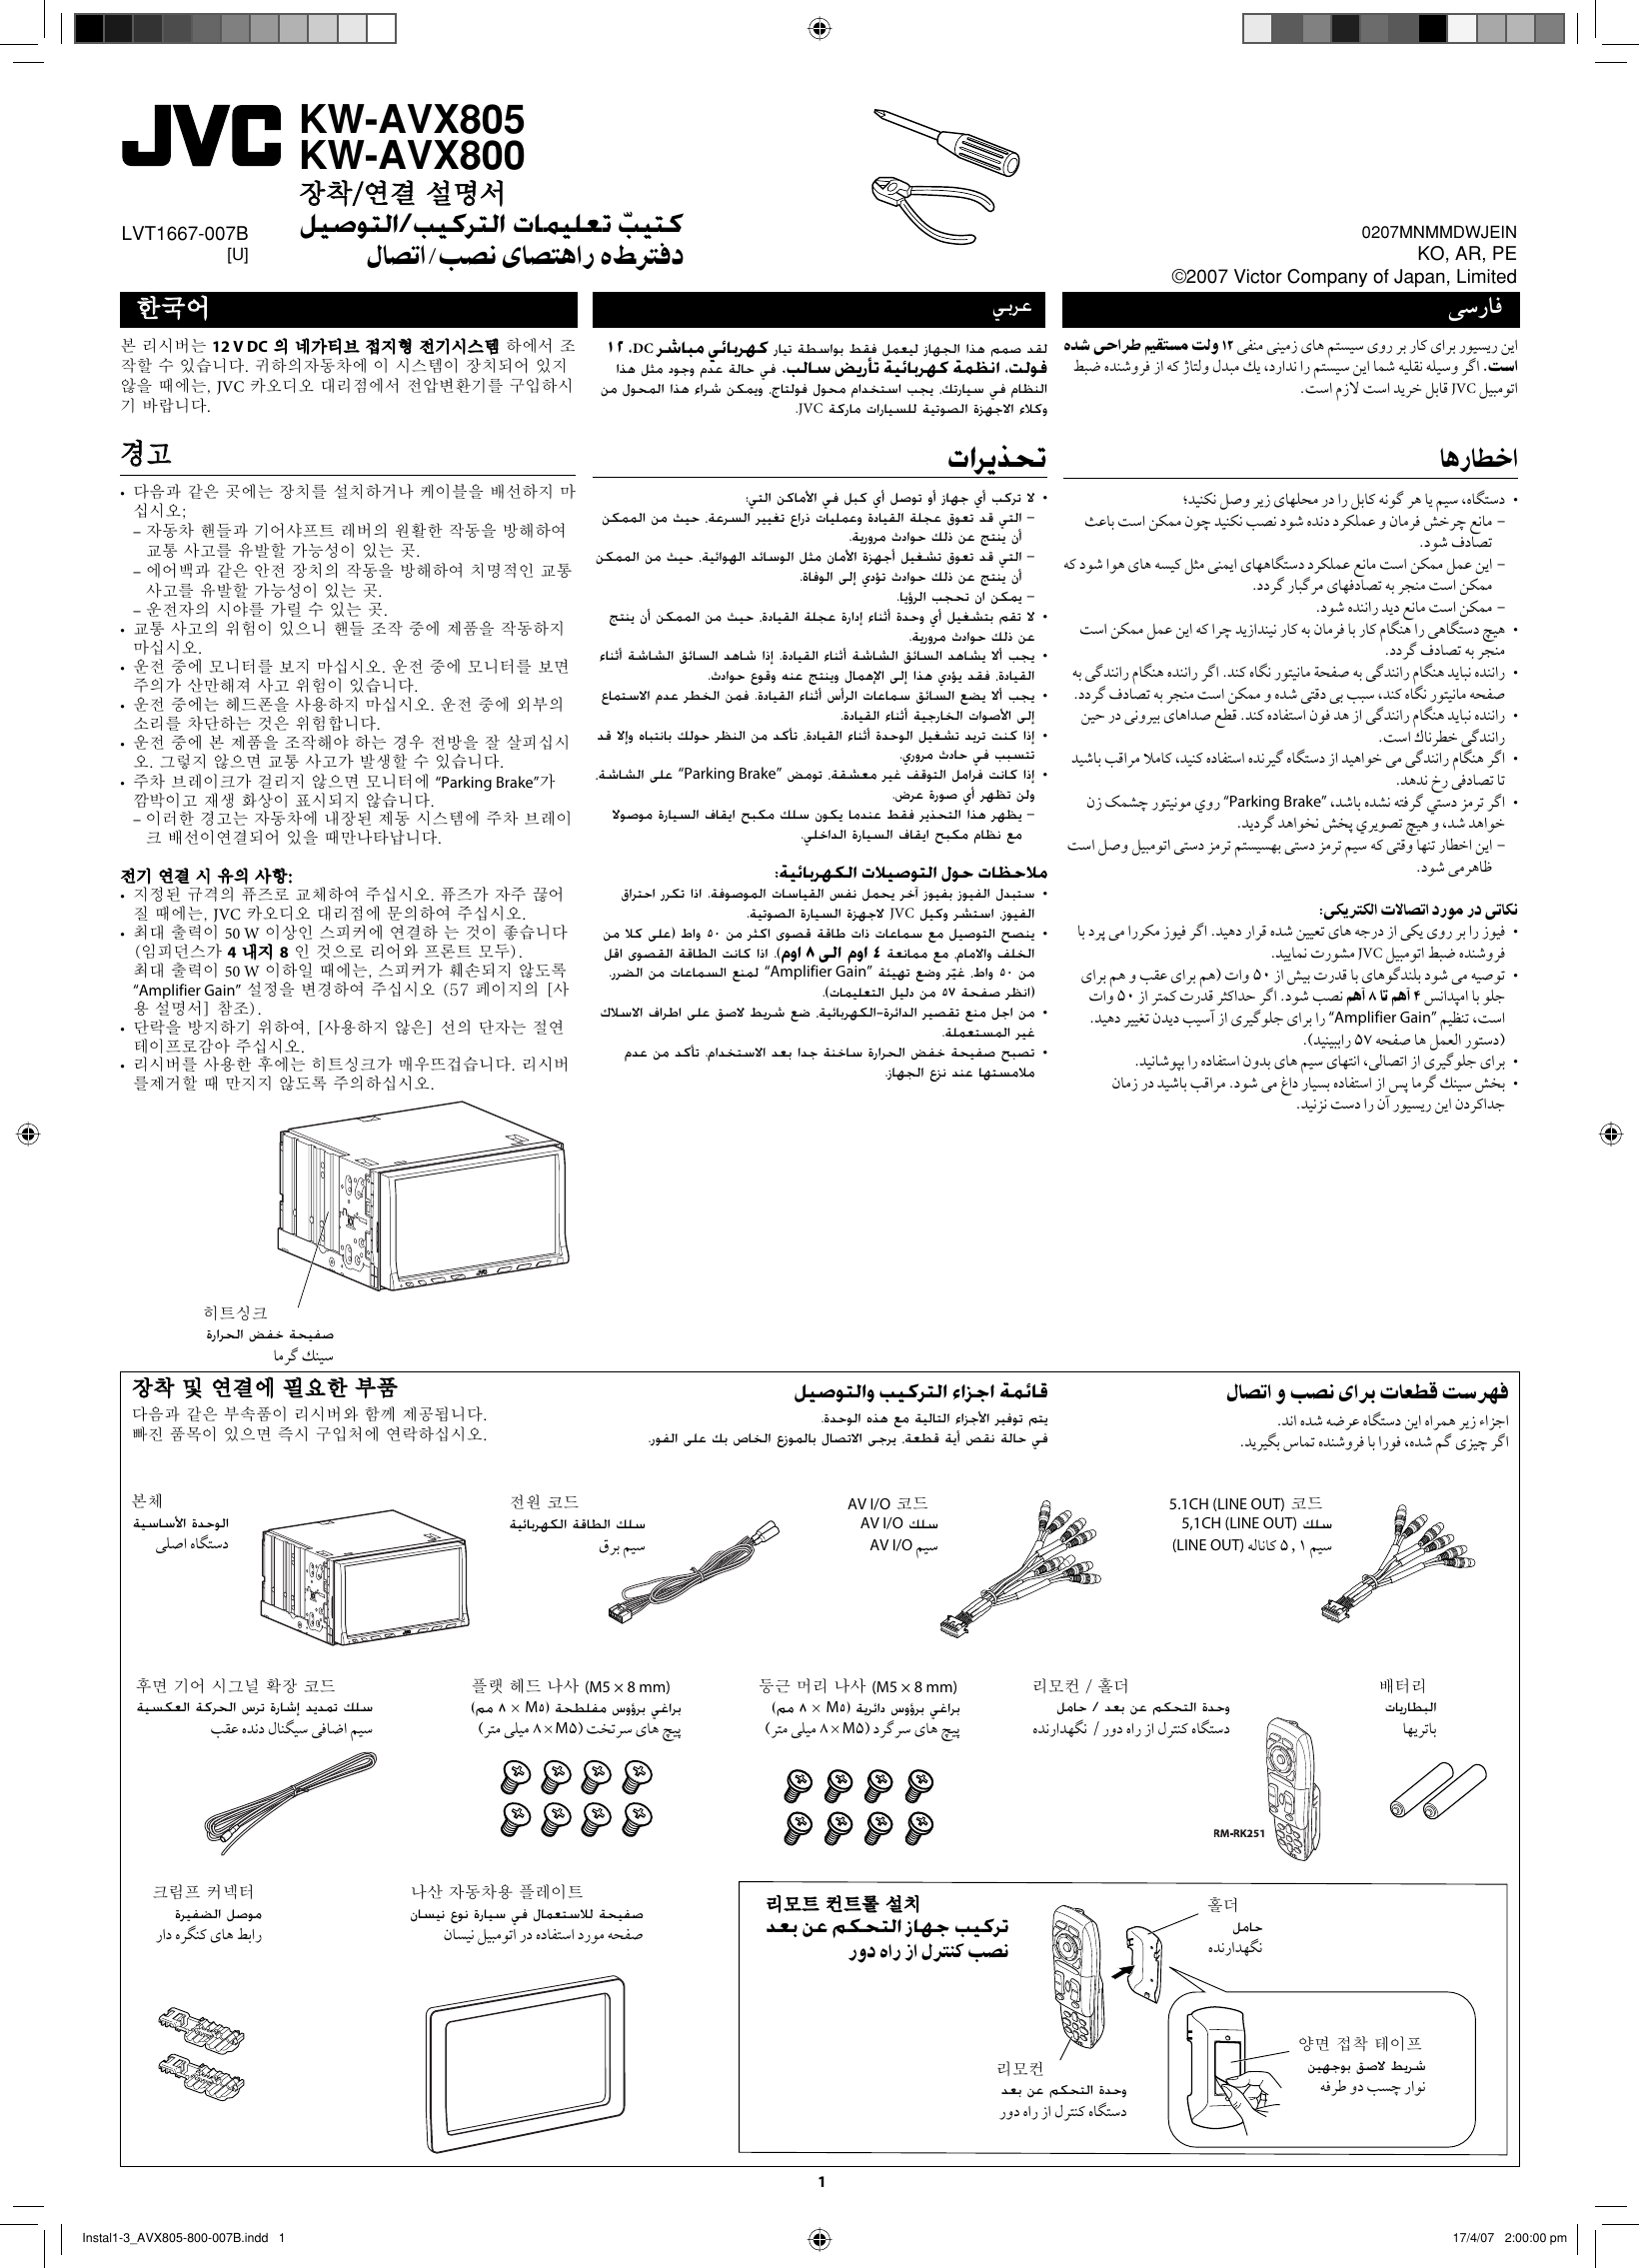 Page 1 of 6 - JVC KW-AVX800U KW-AVX805/KW-AVX800[U] User Manual INSTALLATION (Asia) LVT1667-007B